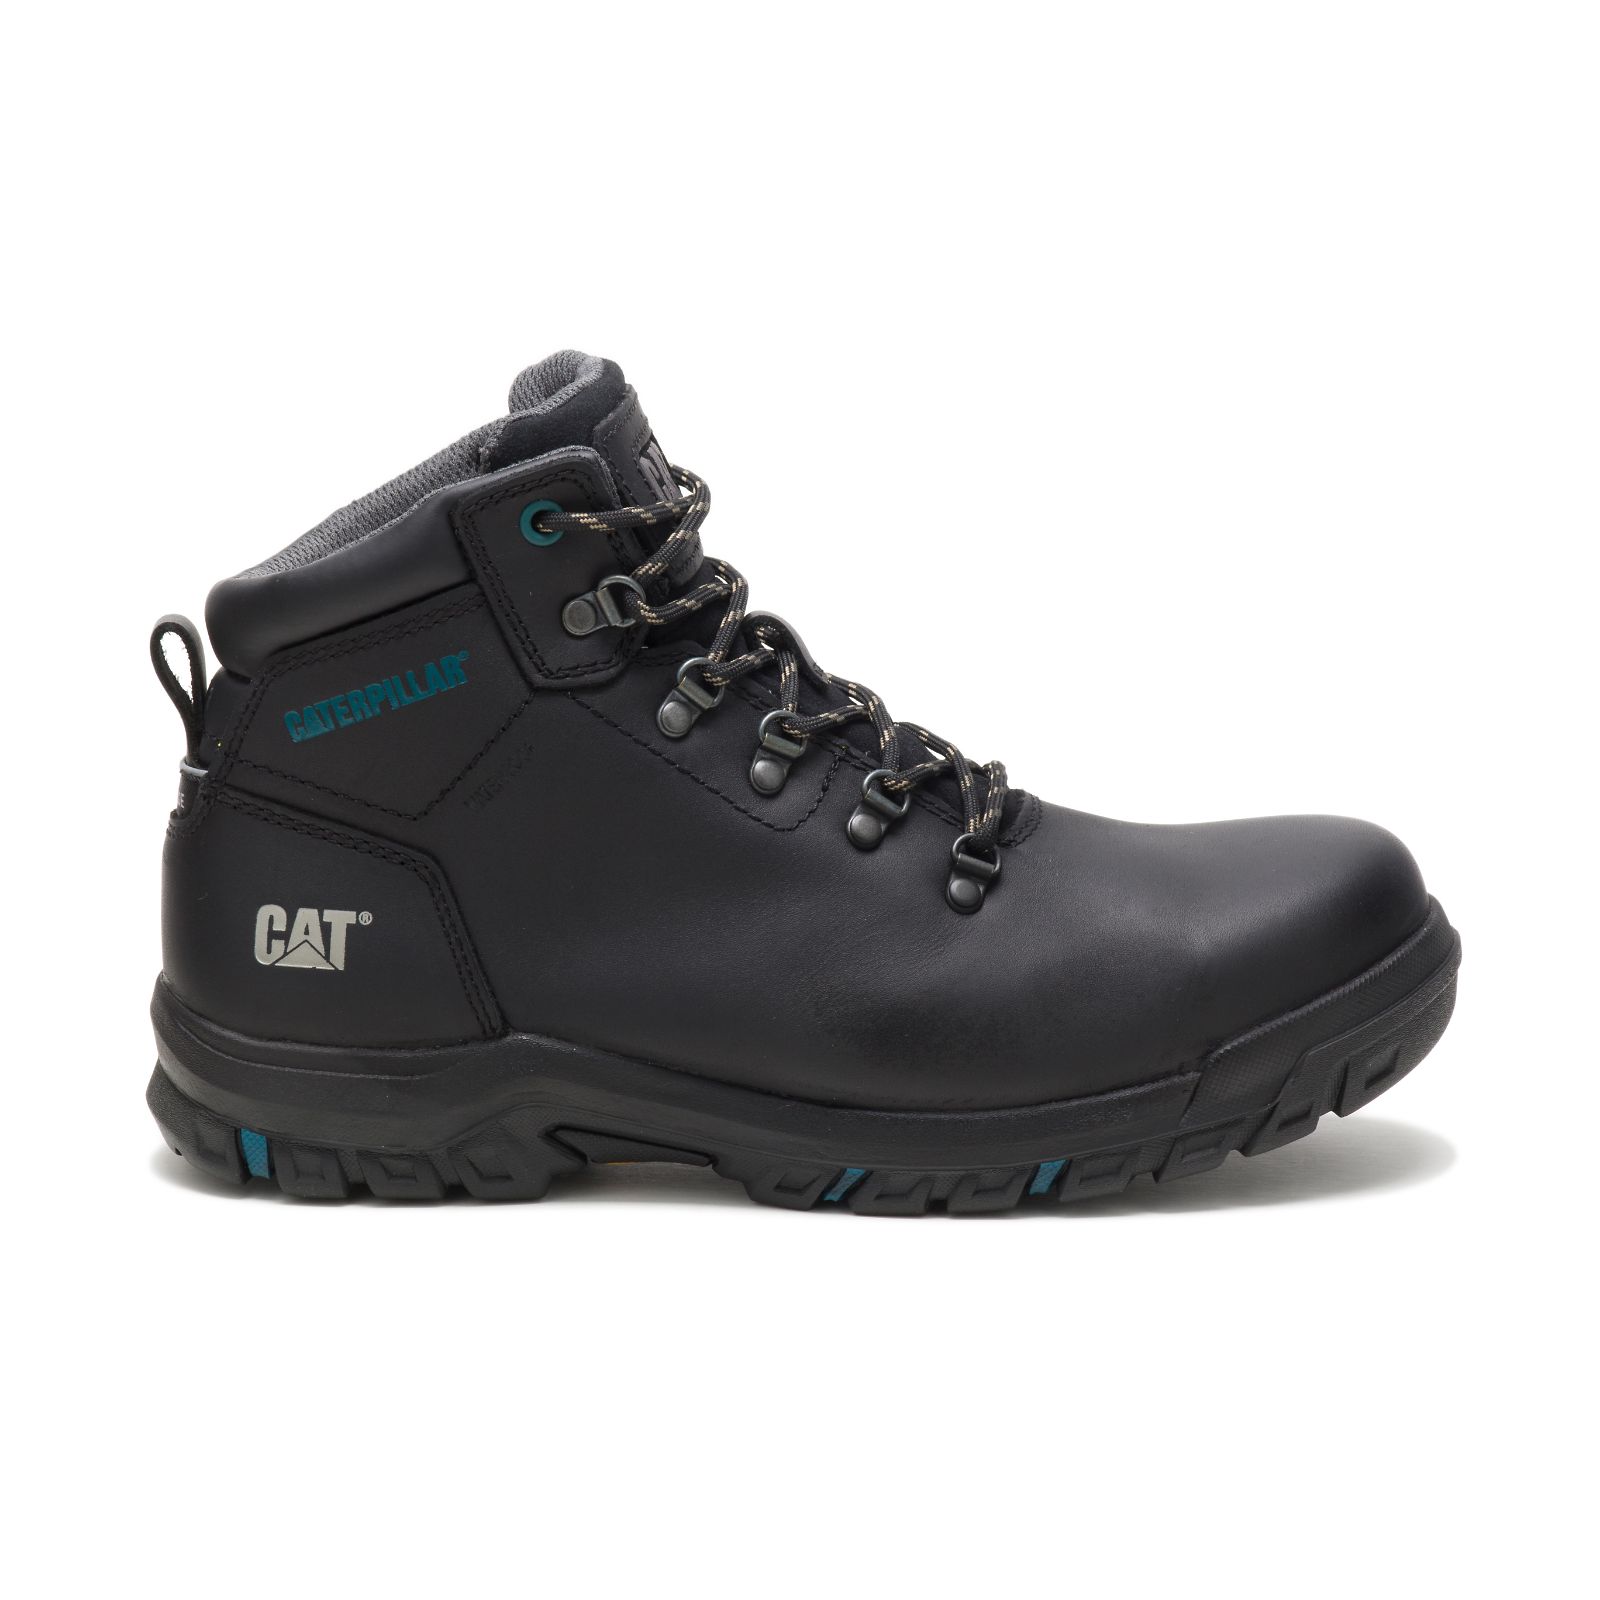 Women's Caterpillar Mae Steel Toe Waterproof Work Boots Black Ireland HPET48956